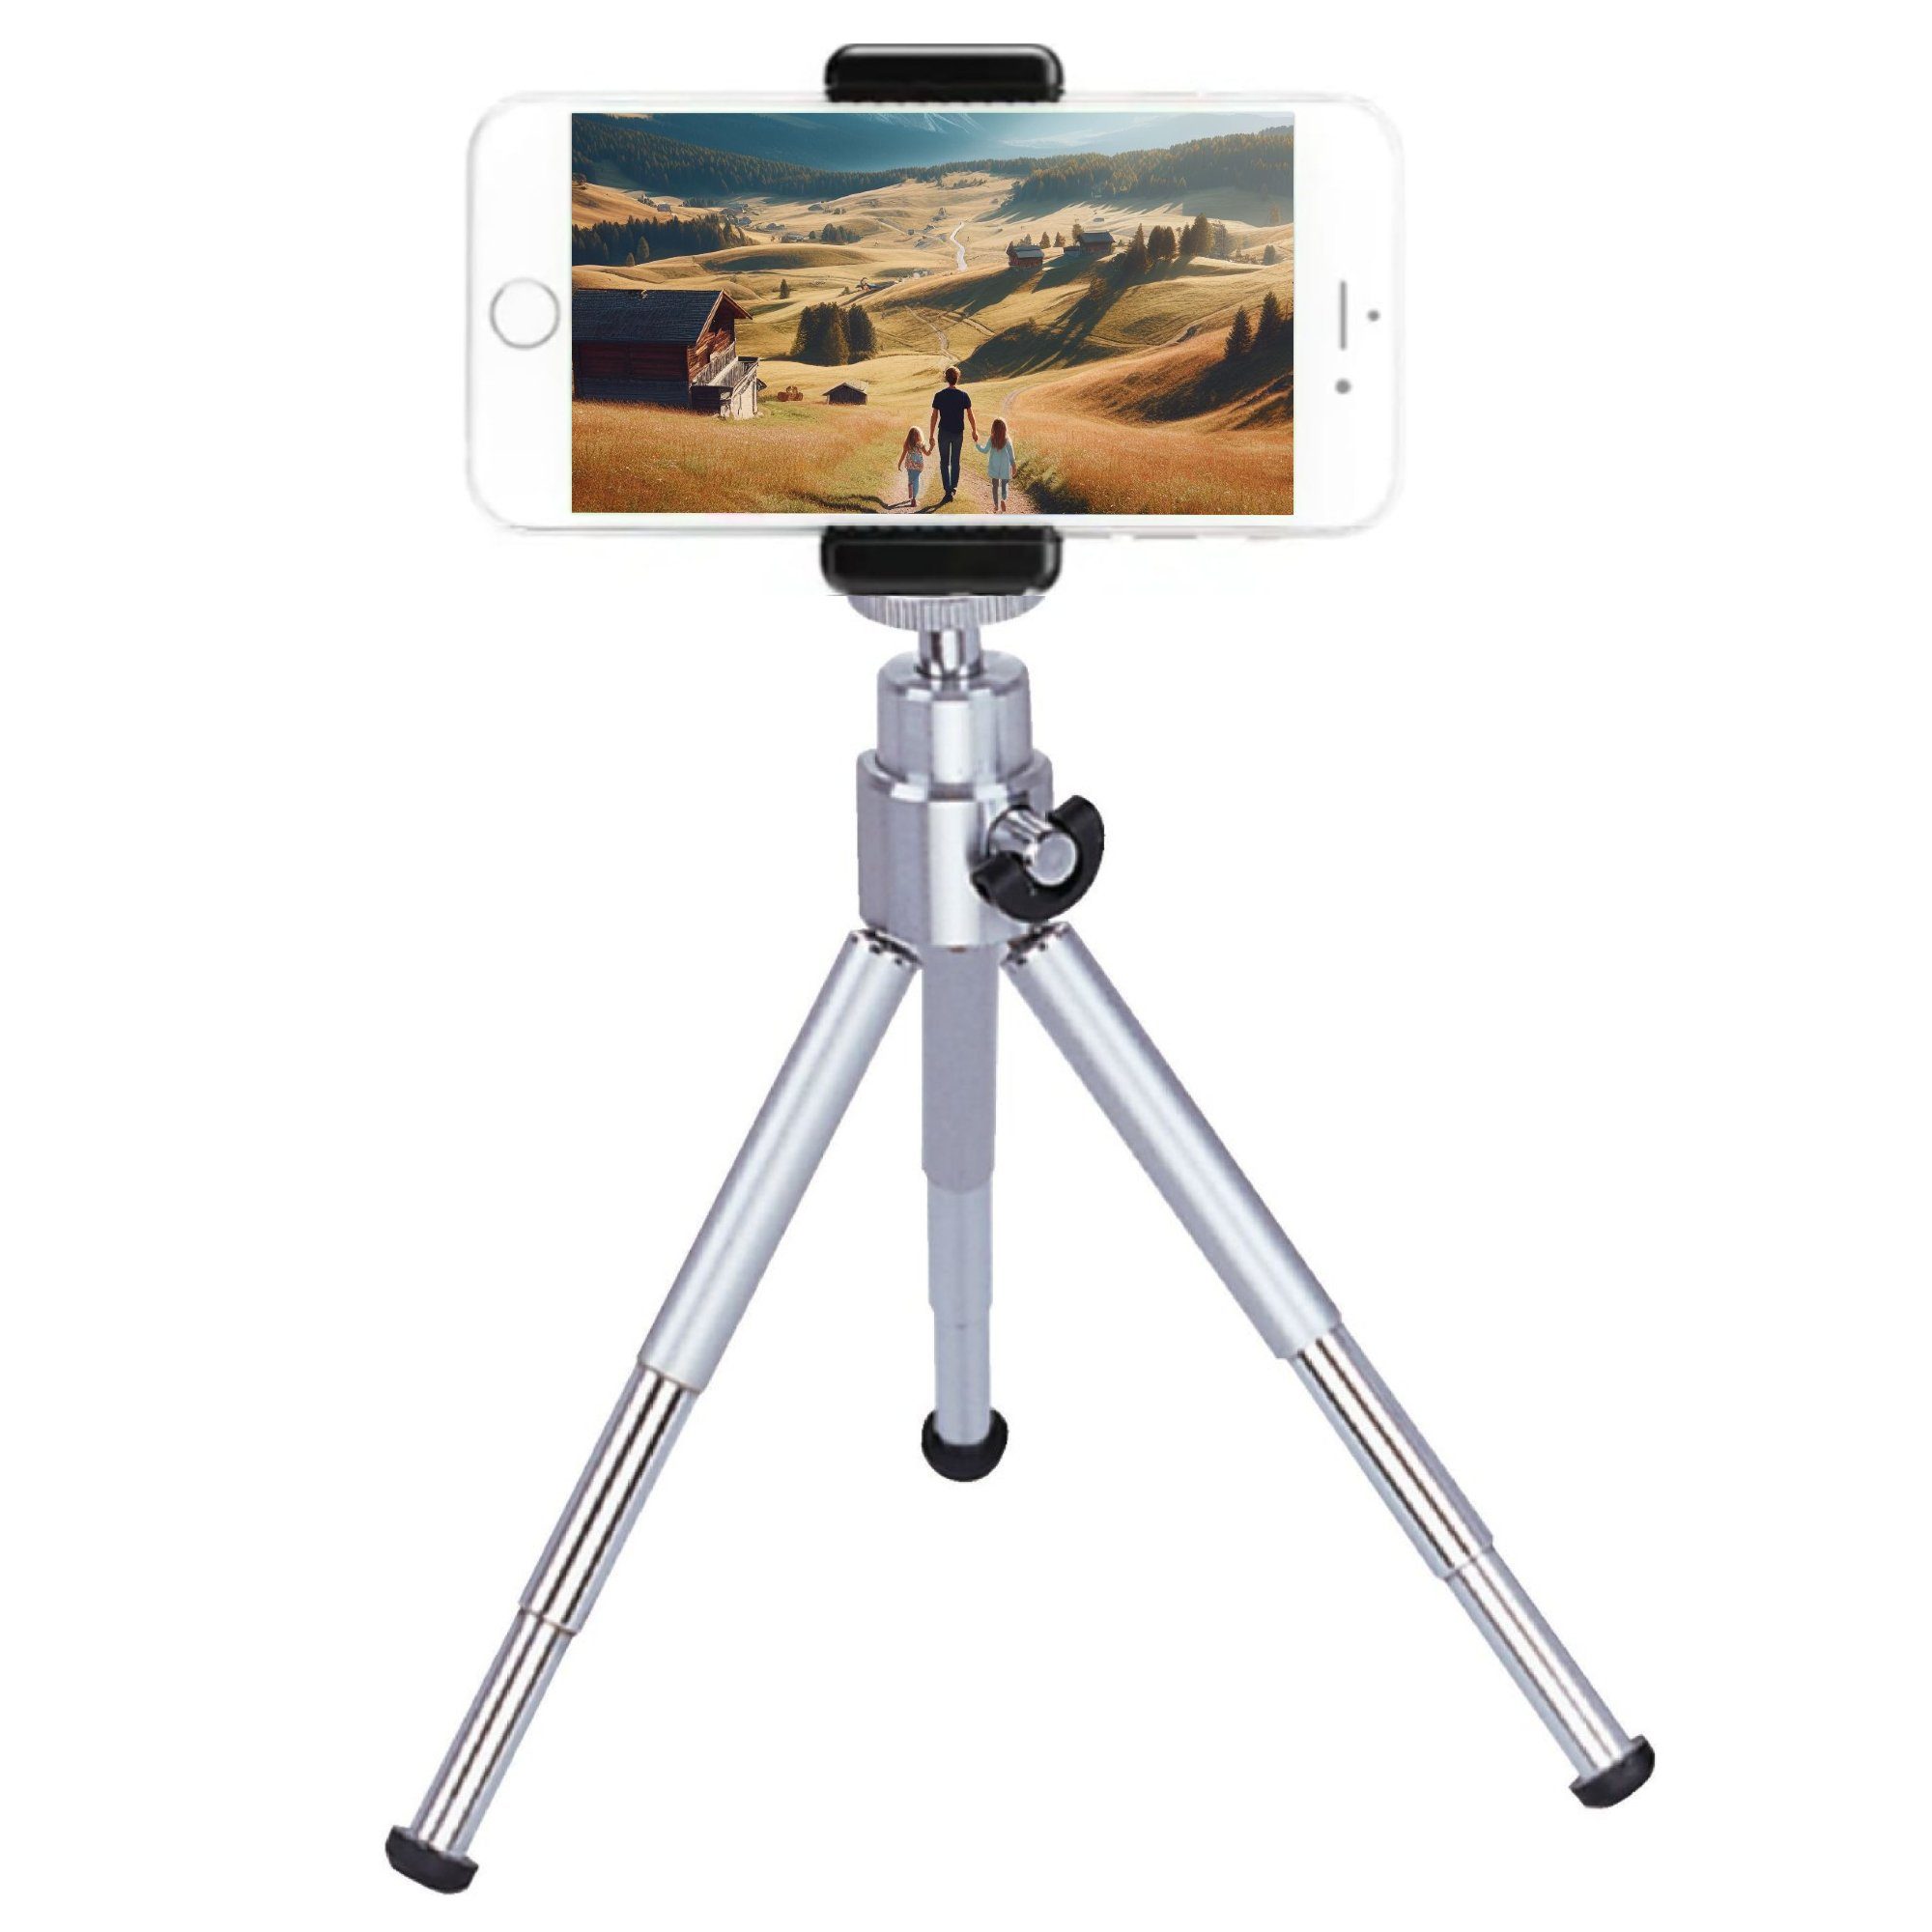 TronicXL Tripod Smartphone Stativ Samsung Handy Apple Ministativ Kamerastativ für (Höhenverstellbar) iPhone